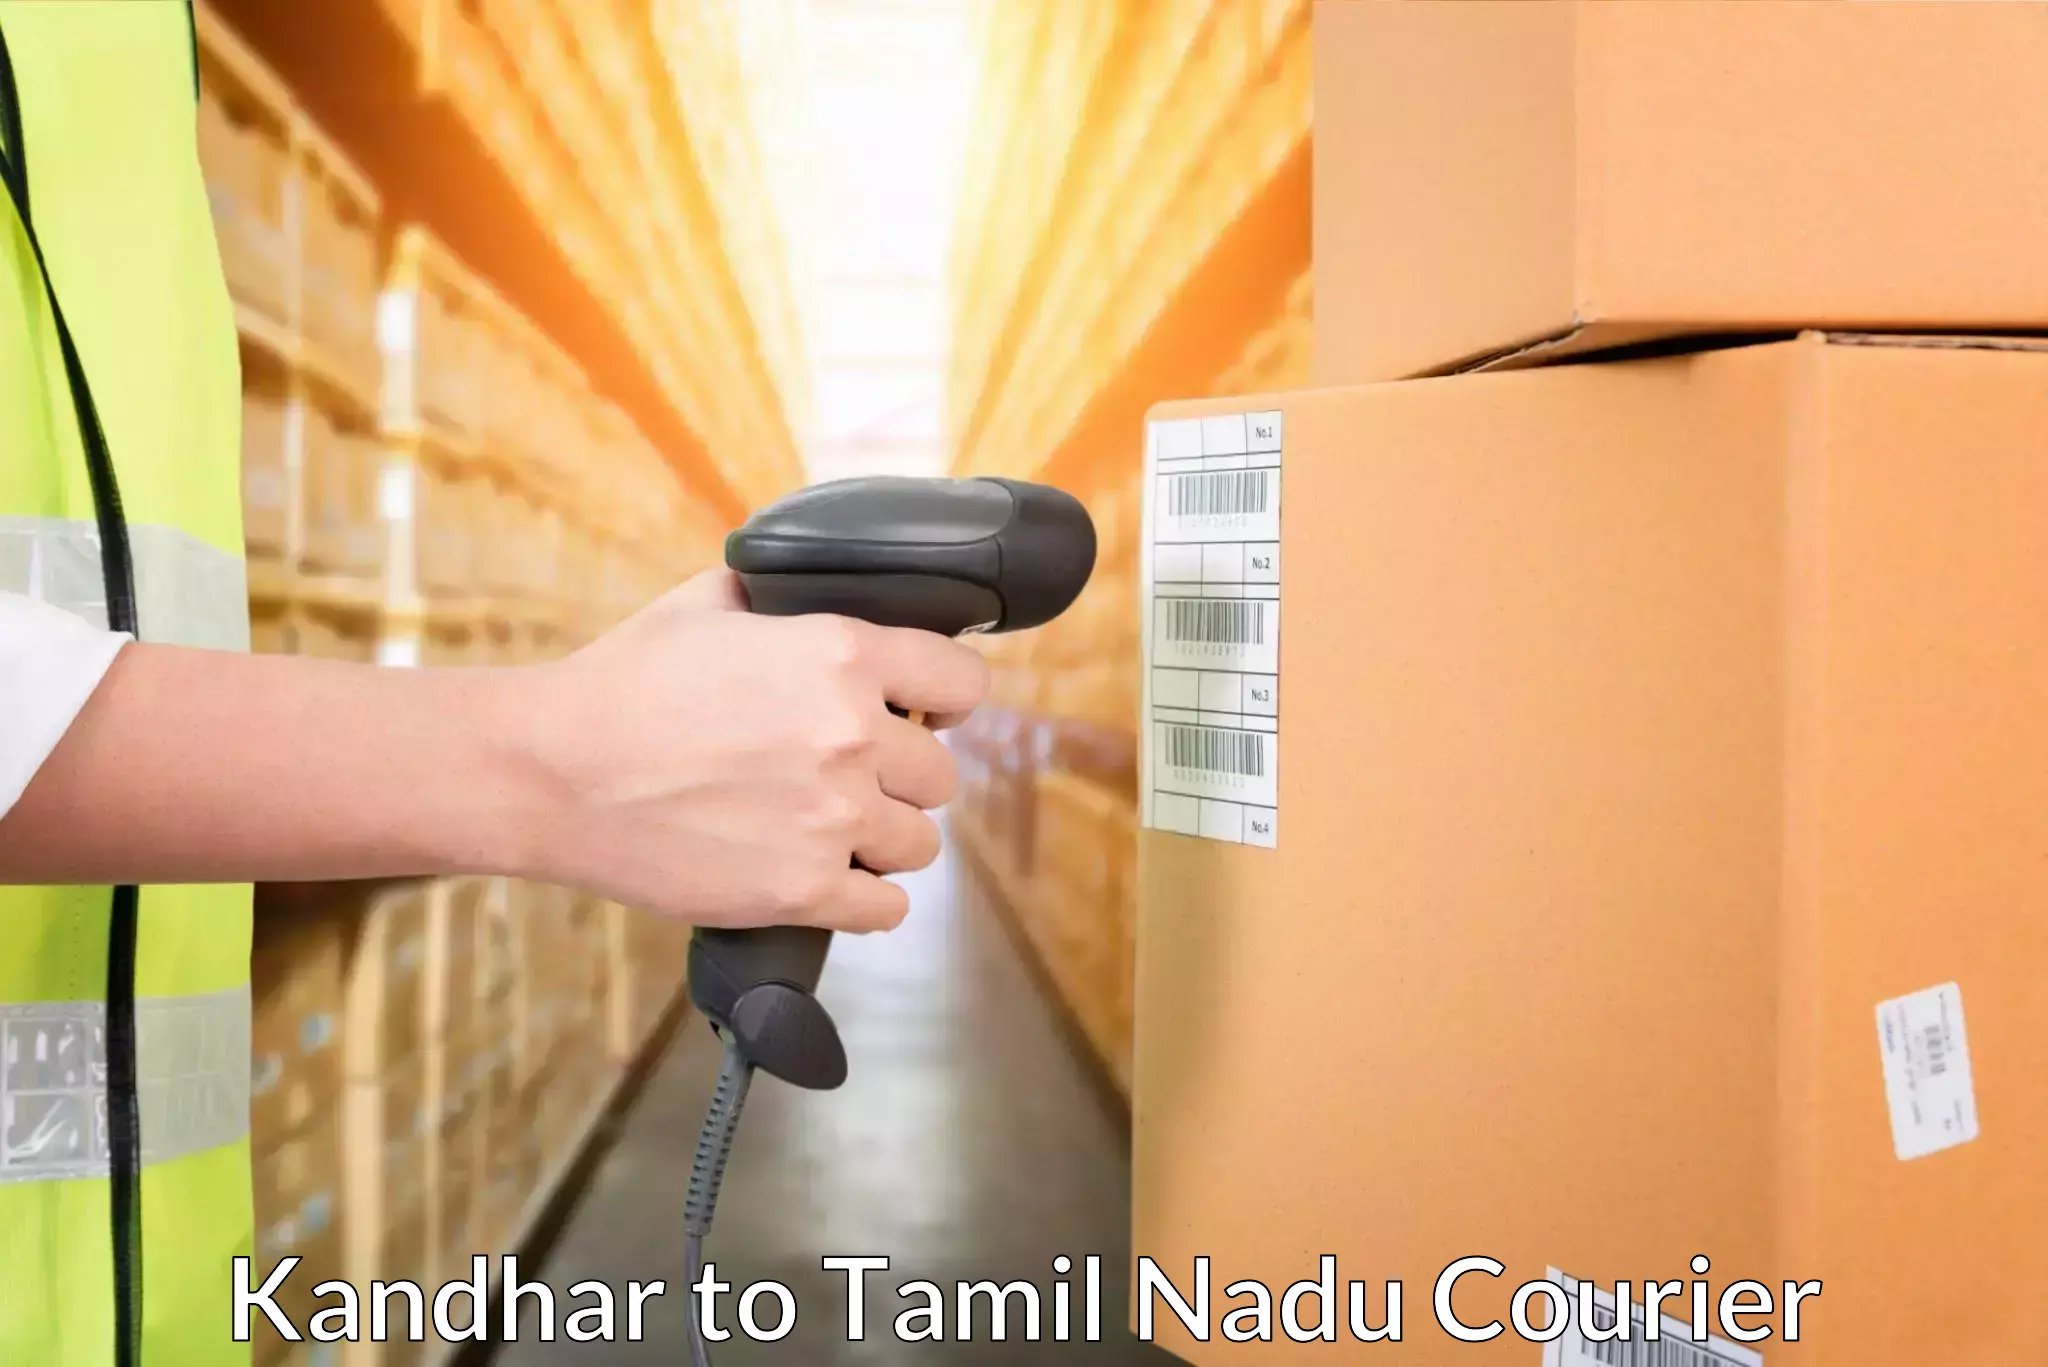 Courier service comparison Kandhar to Panruti